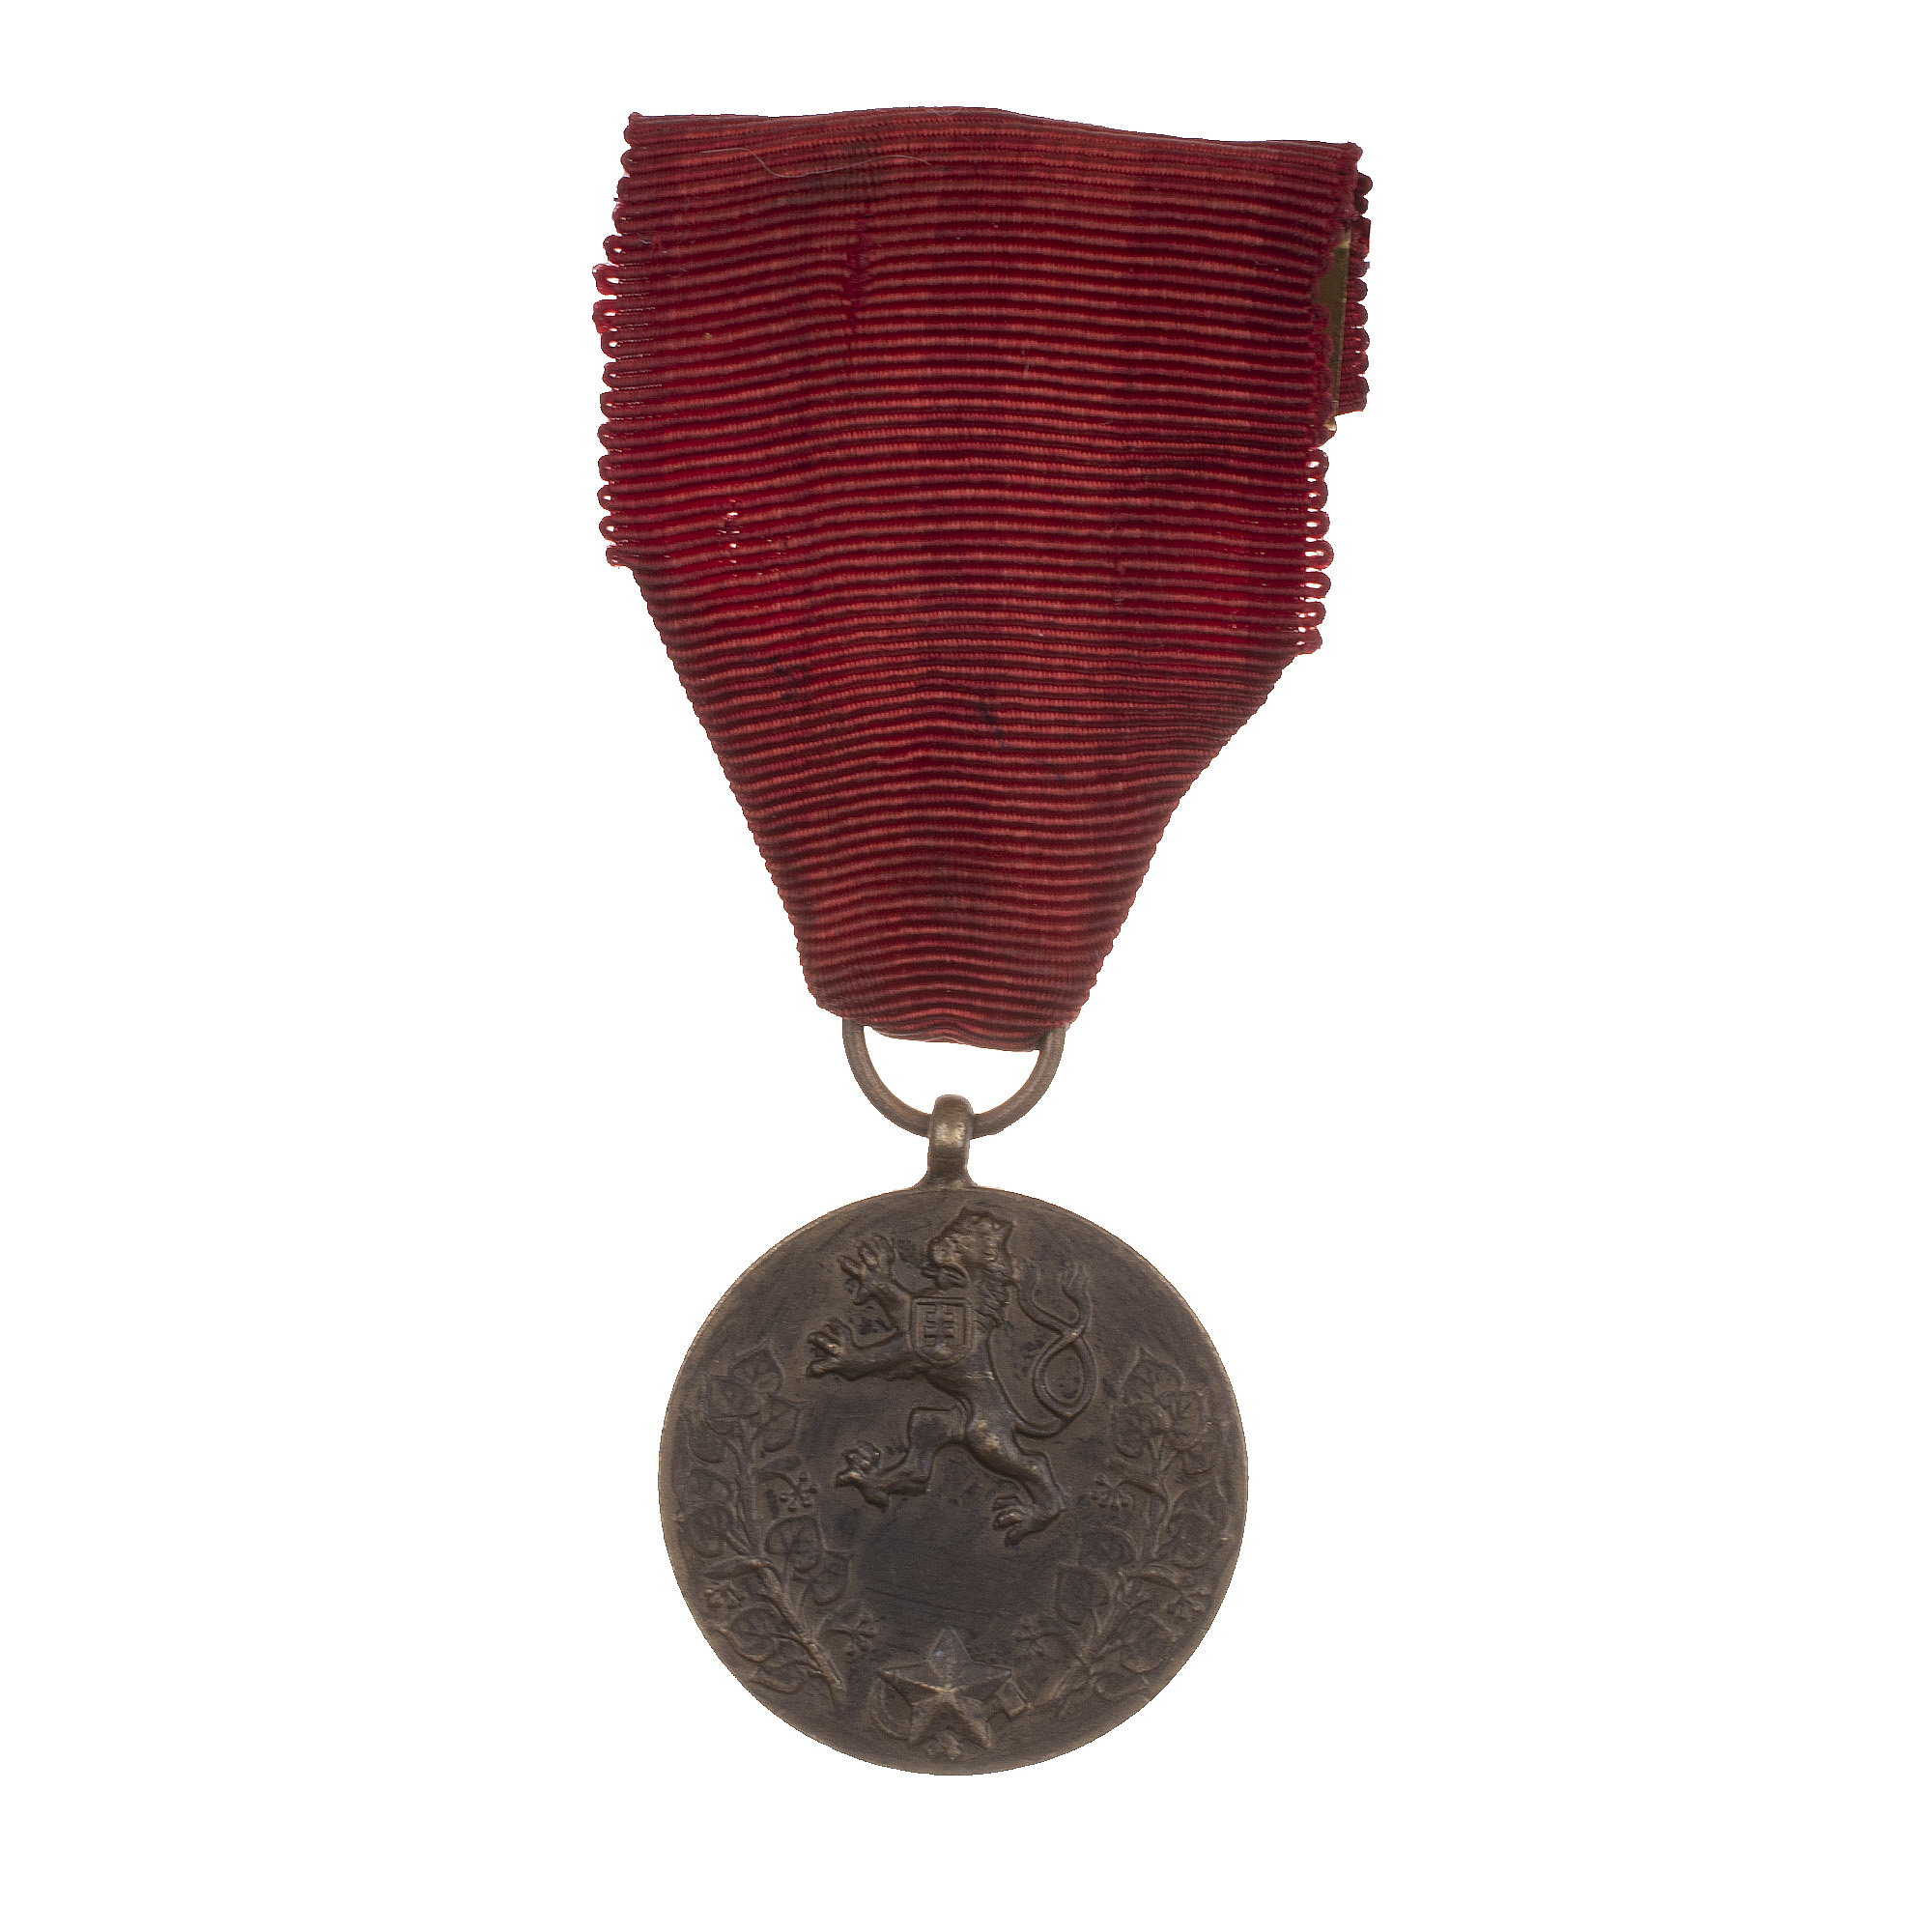 Чехословакия. Медаль "За службу власти"